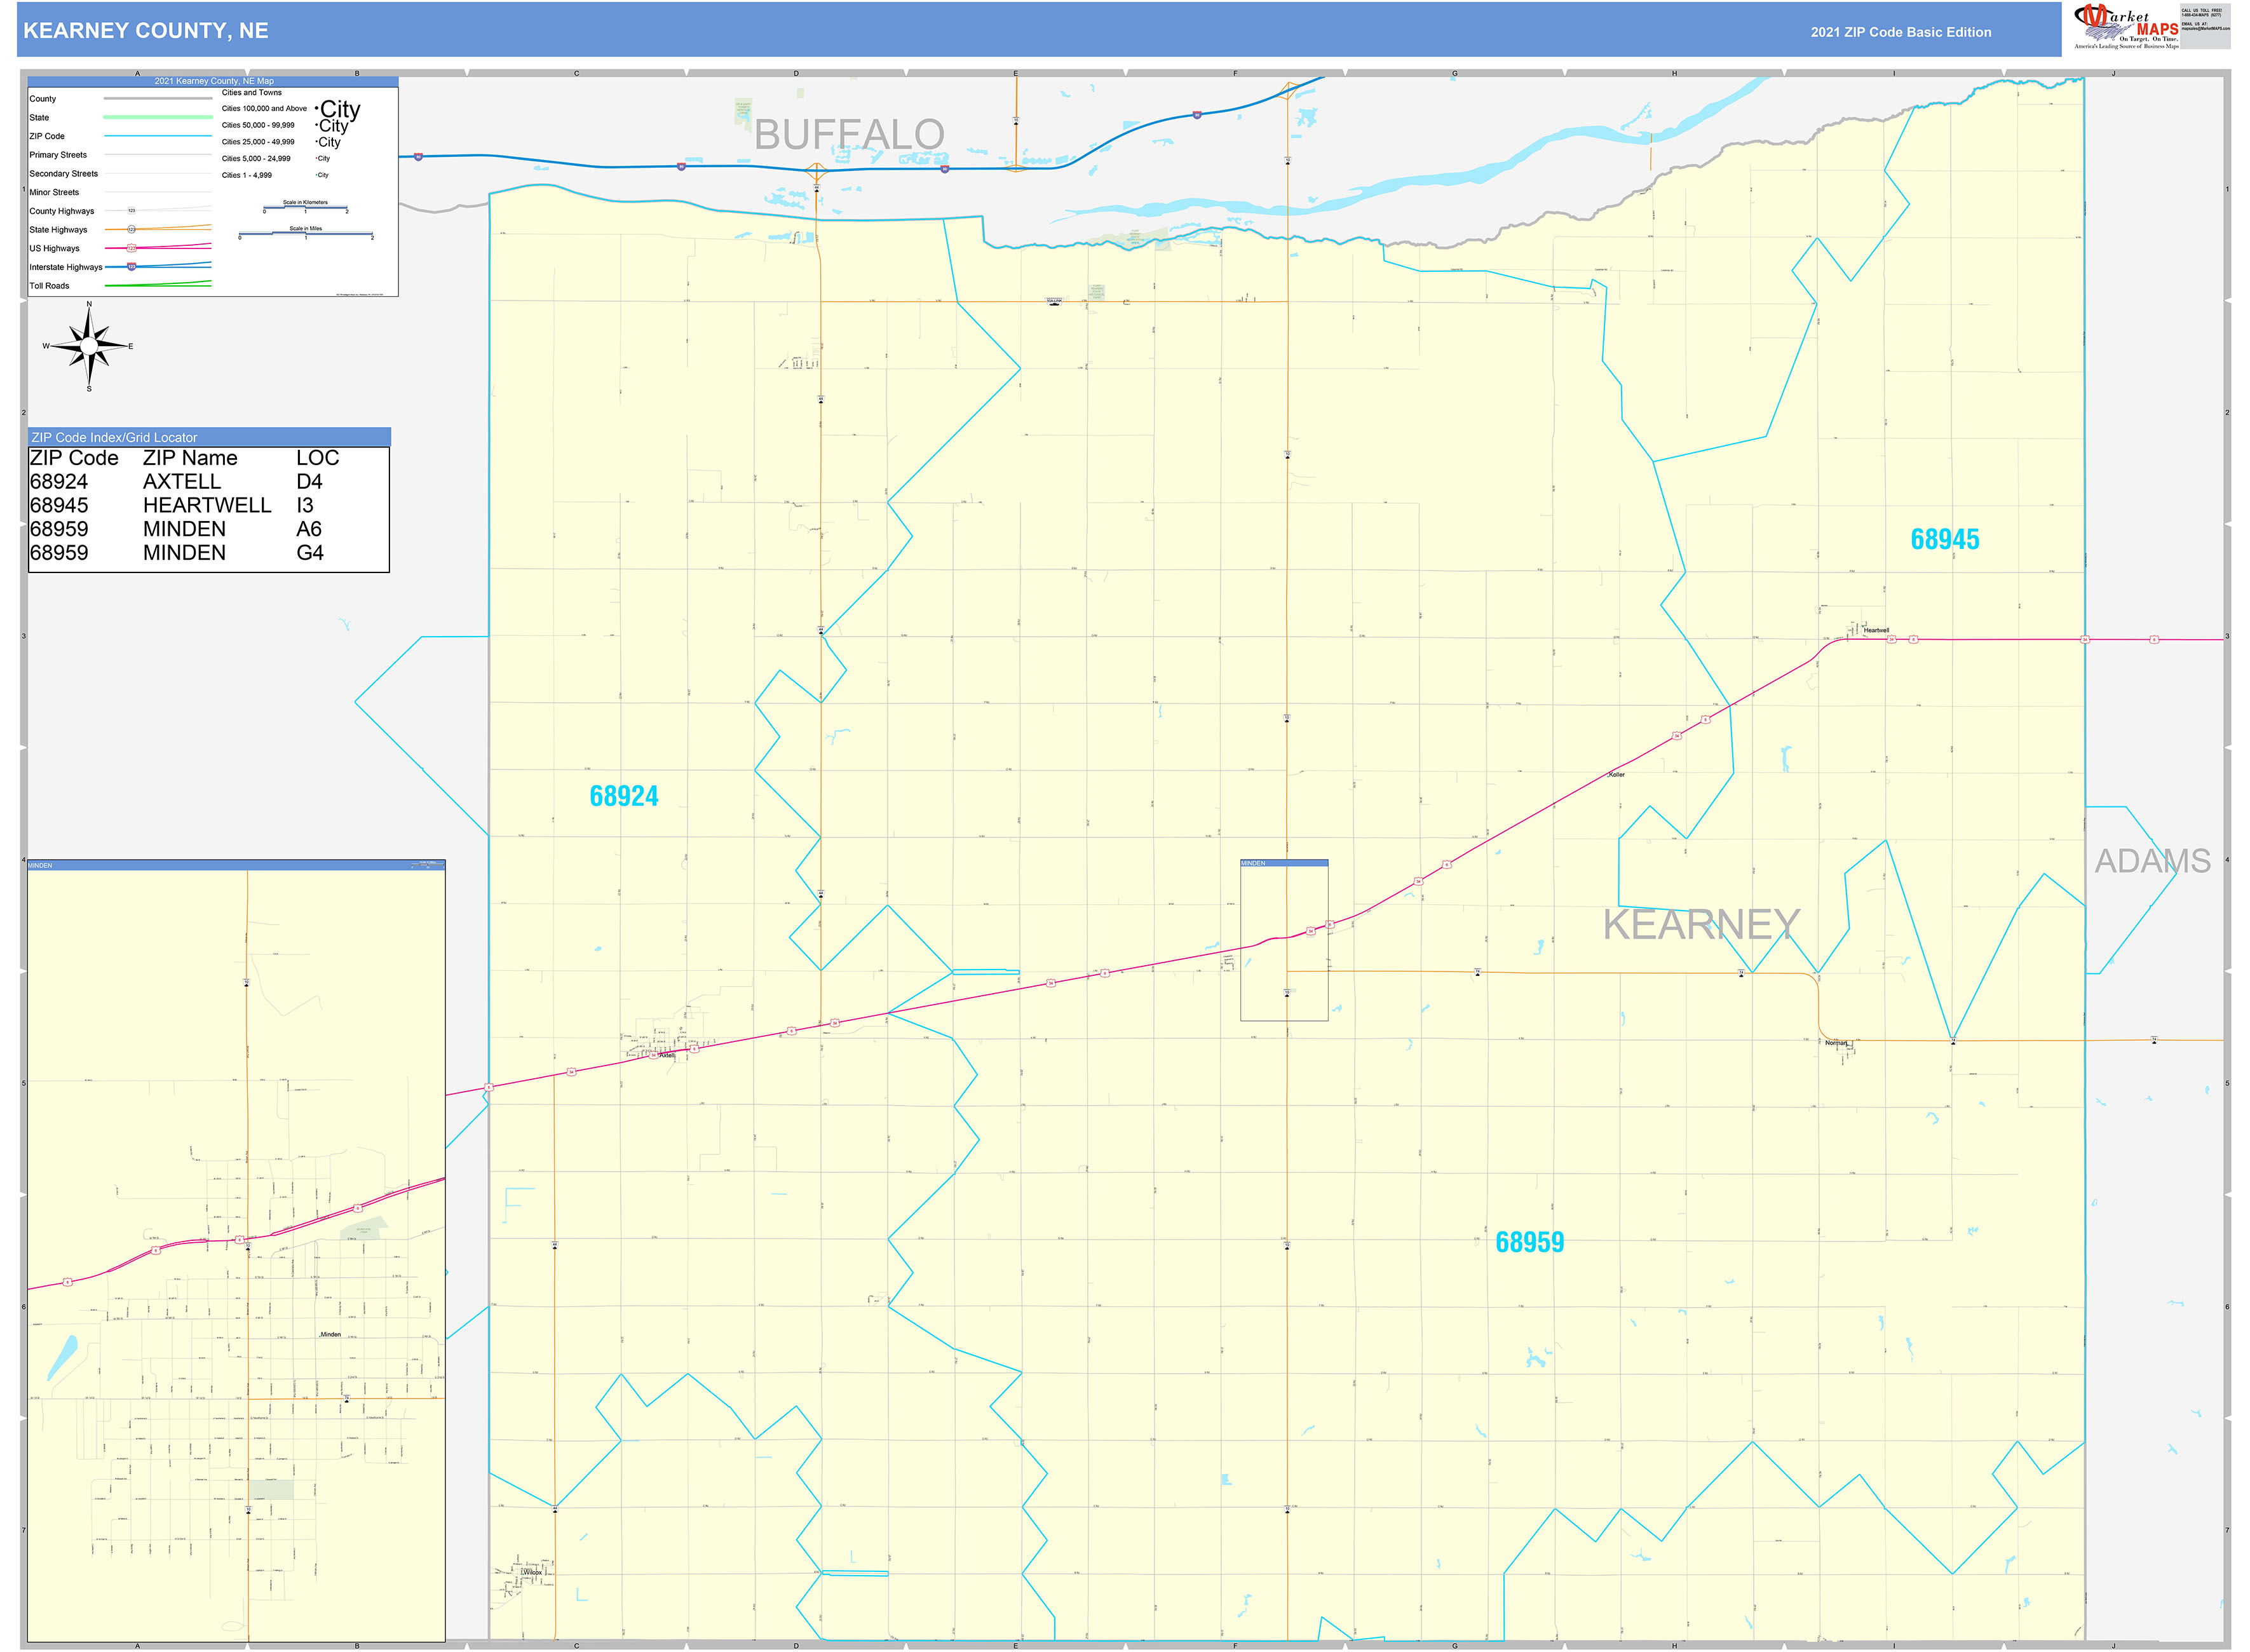 Kearney County, NE Zip Code Wall Map Basic Style by MarketMAPS MapSales